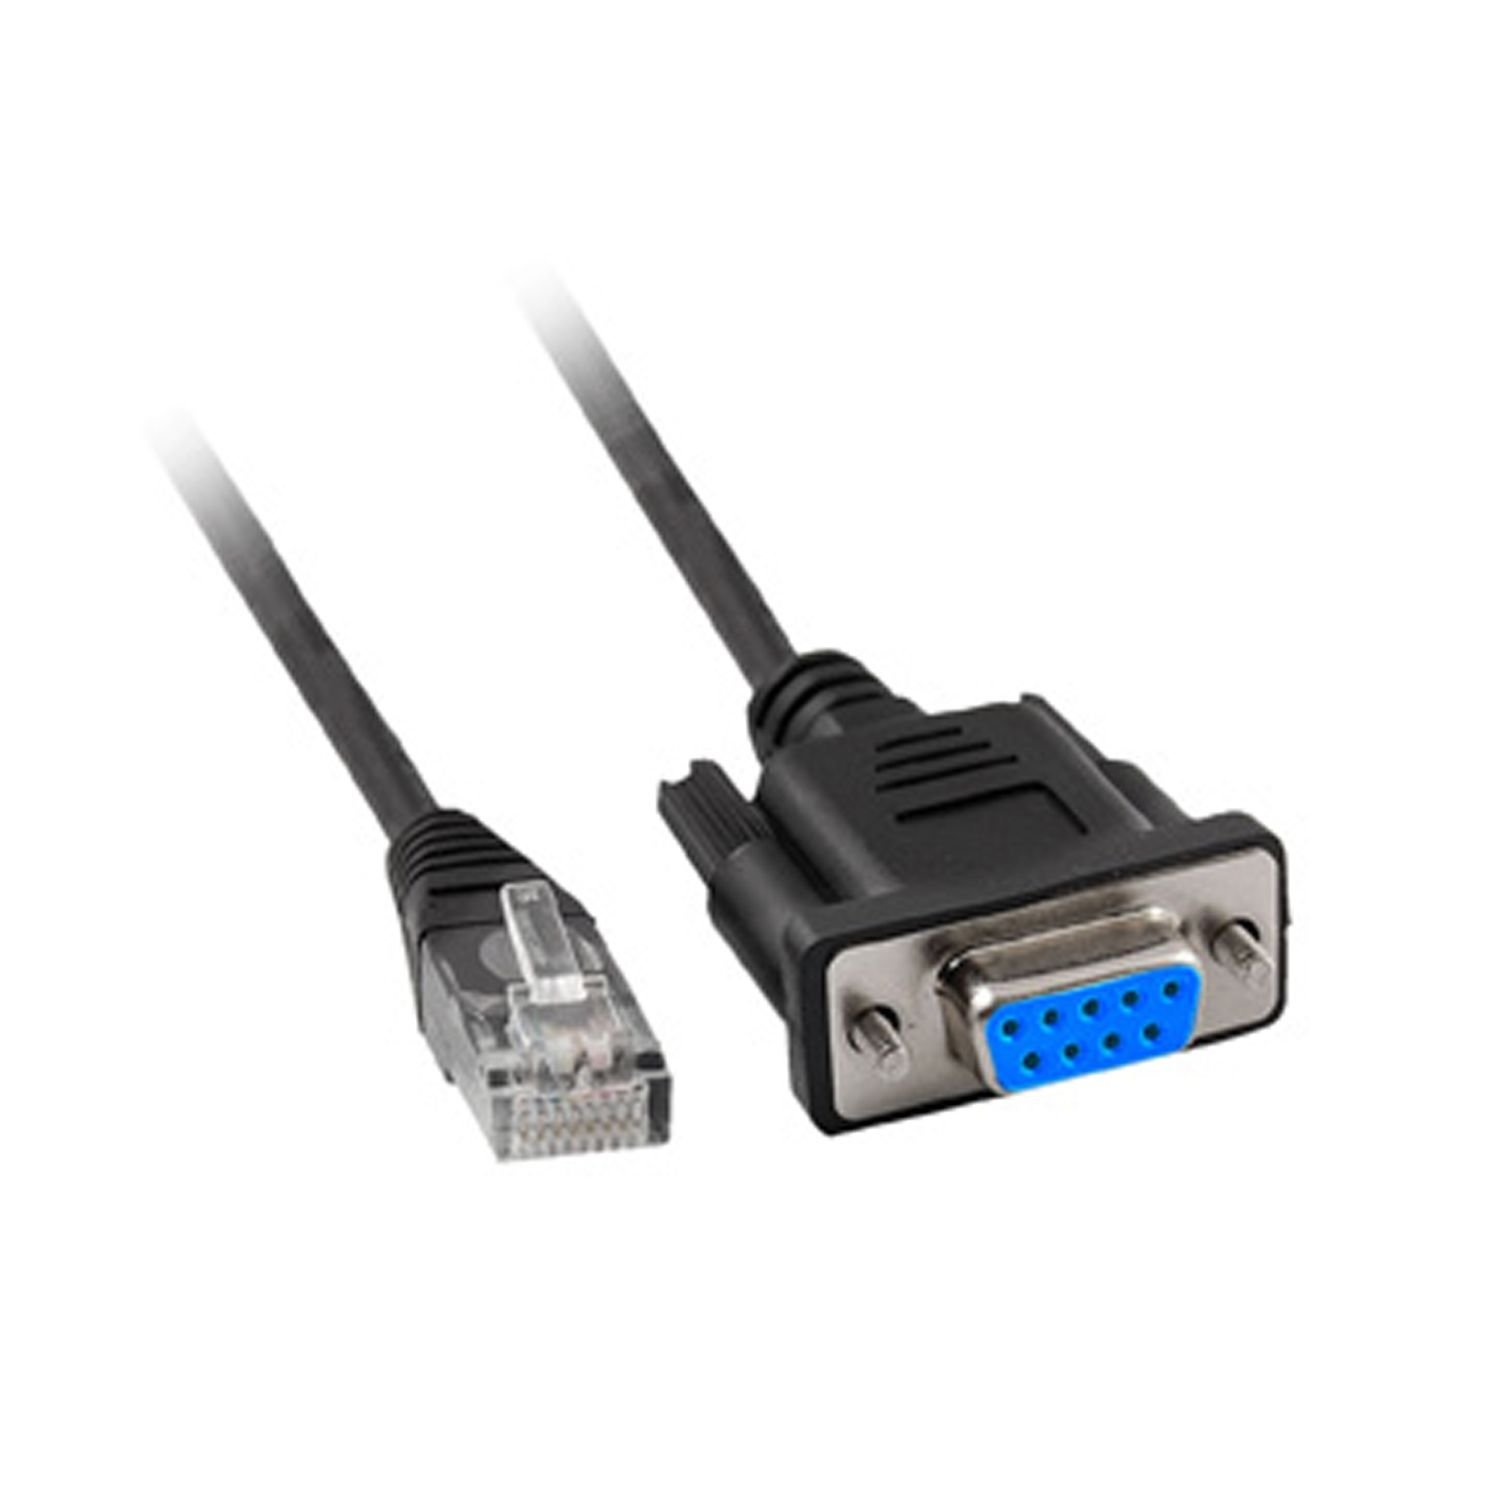 XBTZ9008 connecting cable, Harmony XBT GT, RS485 cable for Shneider Electric PLC M200/M221/M241/M251/M340, HMI Sub-D9 to PLC RJ45